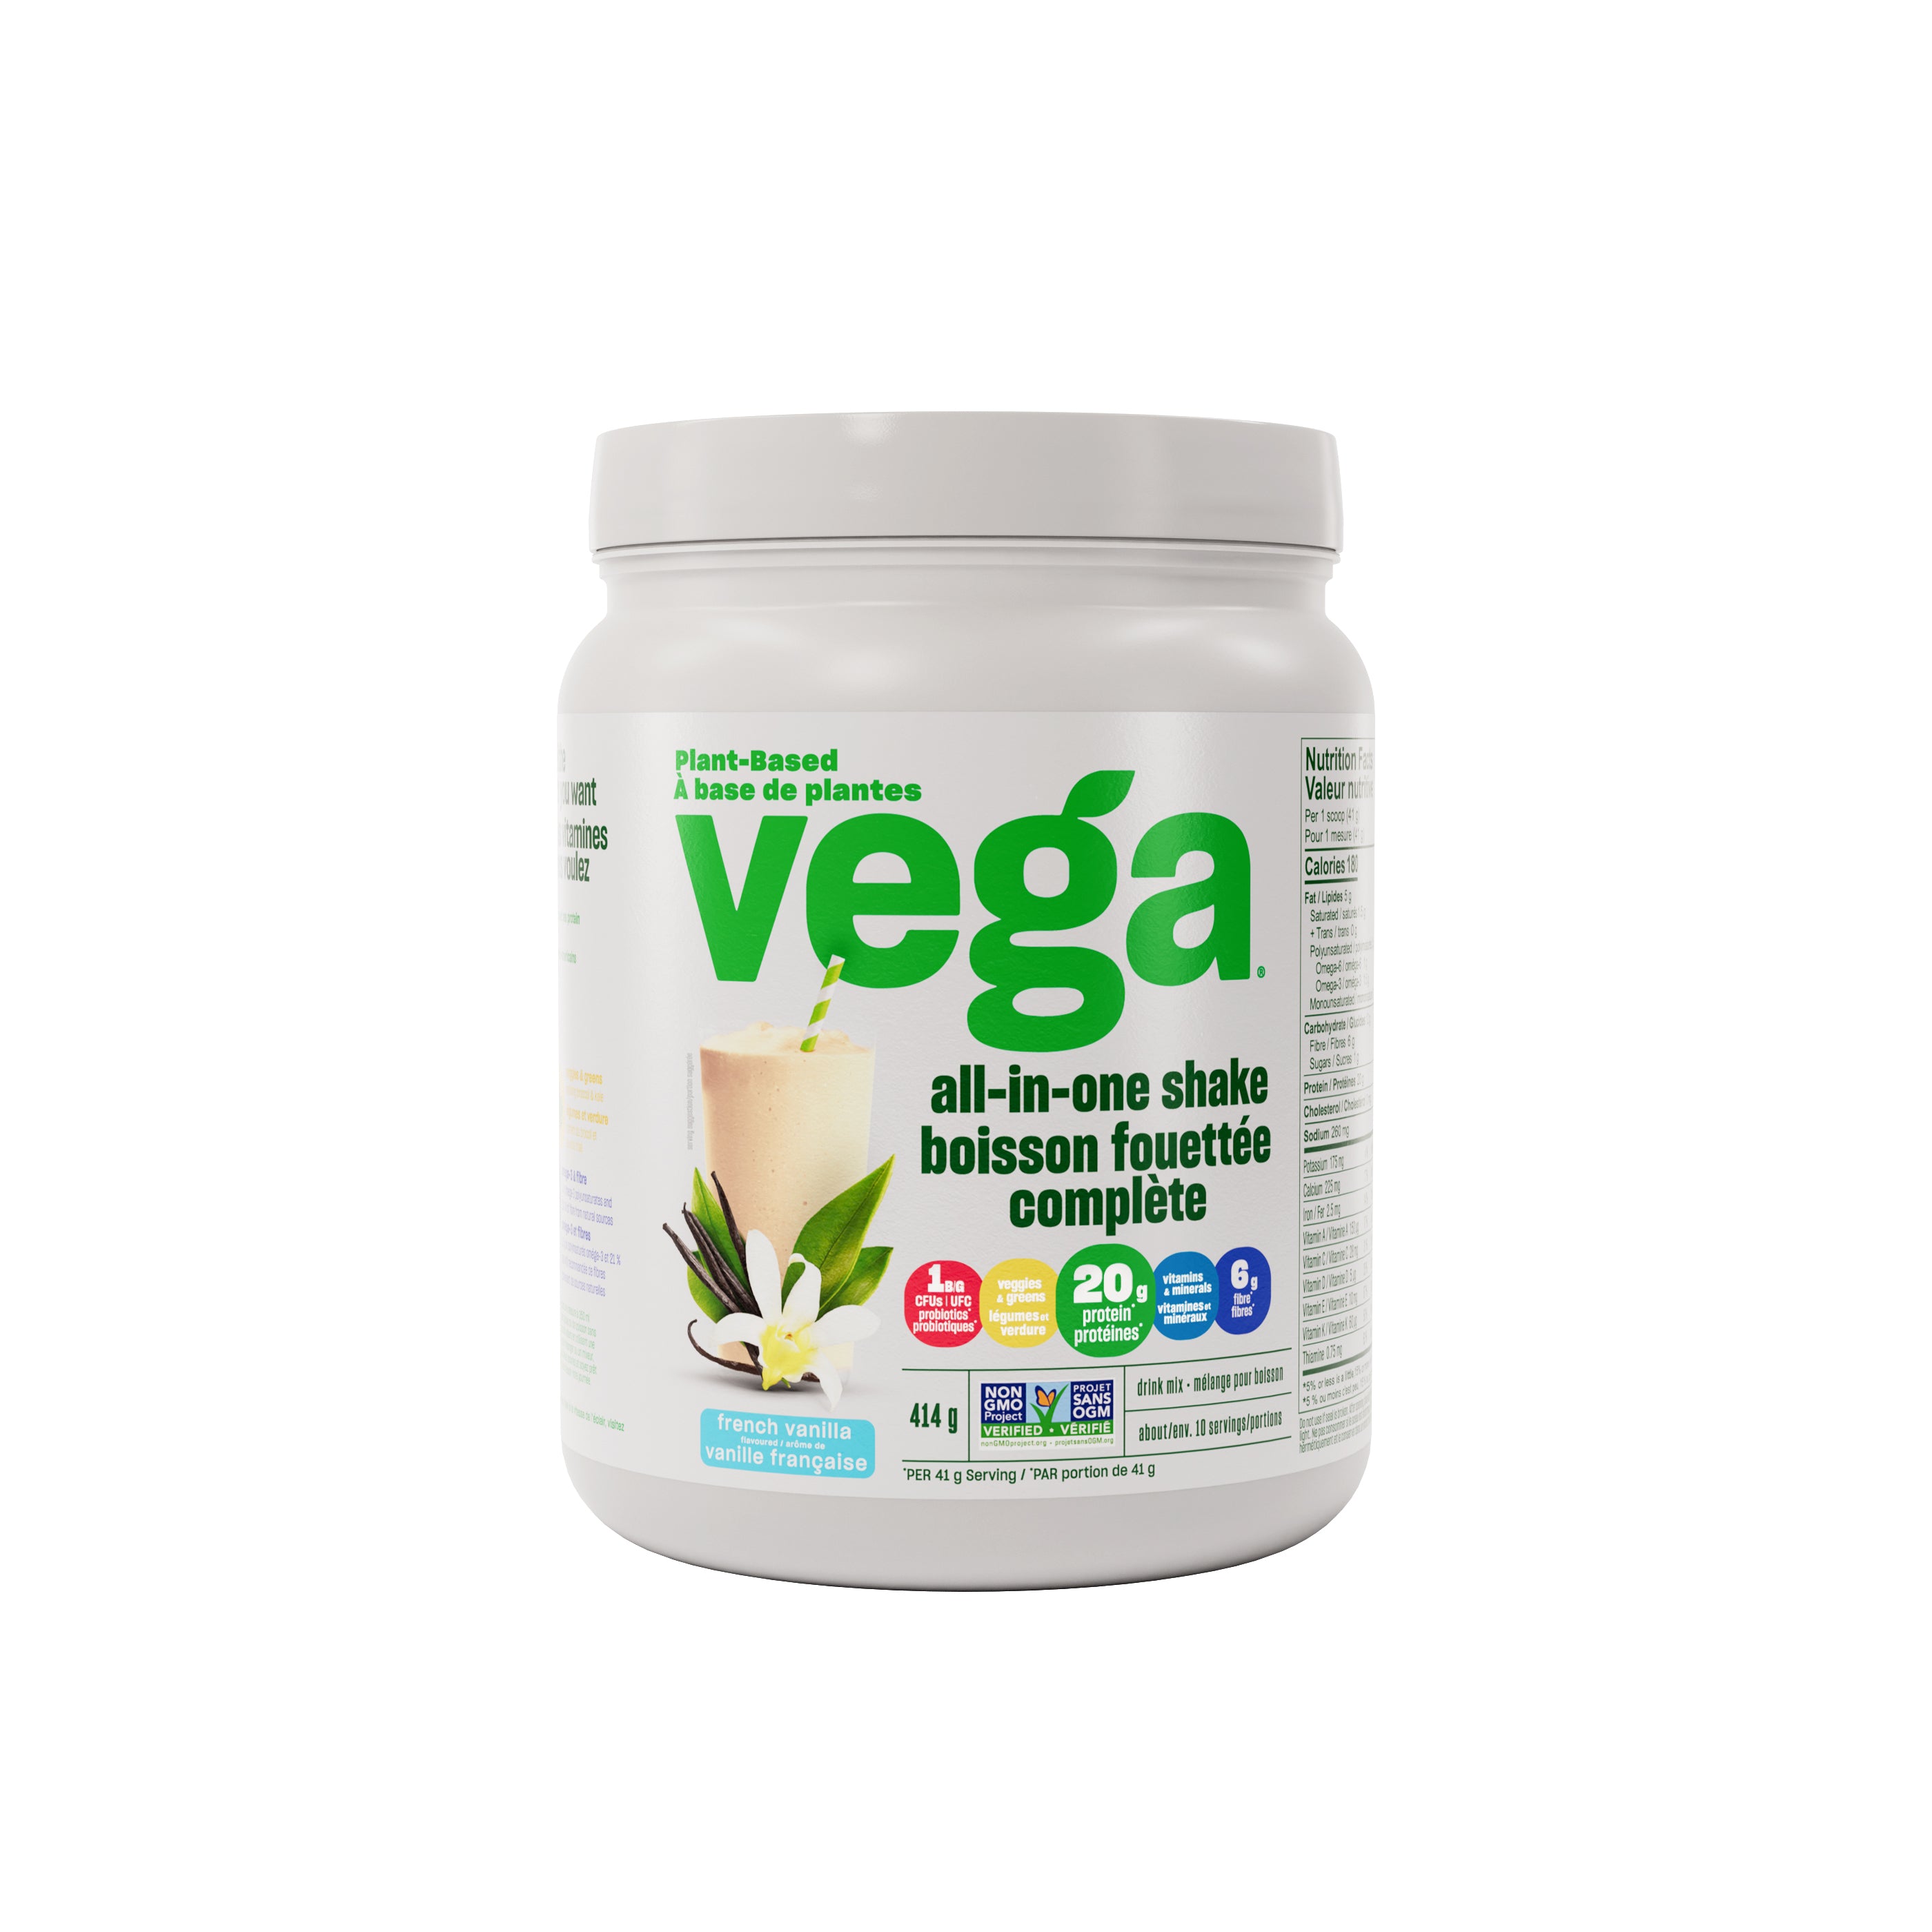 Vega One All in One Shake - French Vanilla - Lifestyle Markets